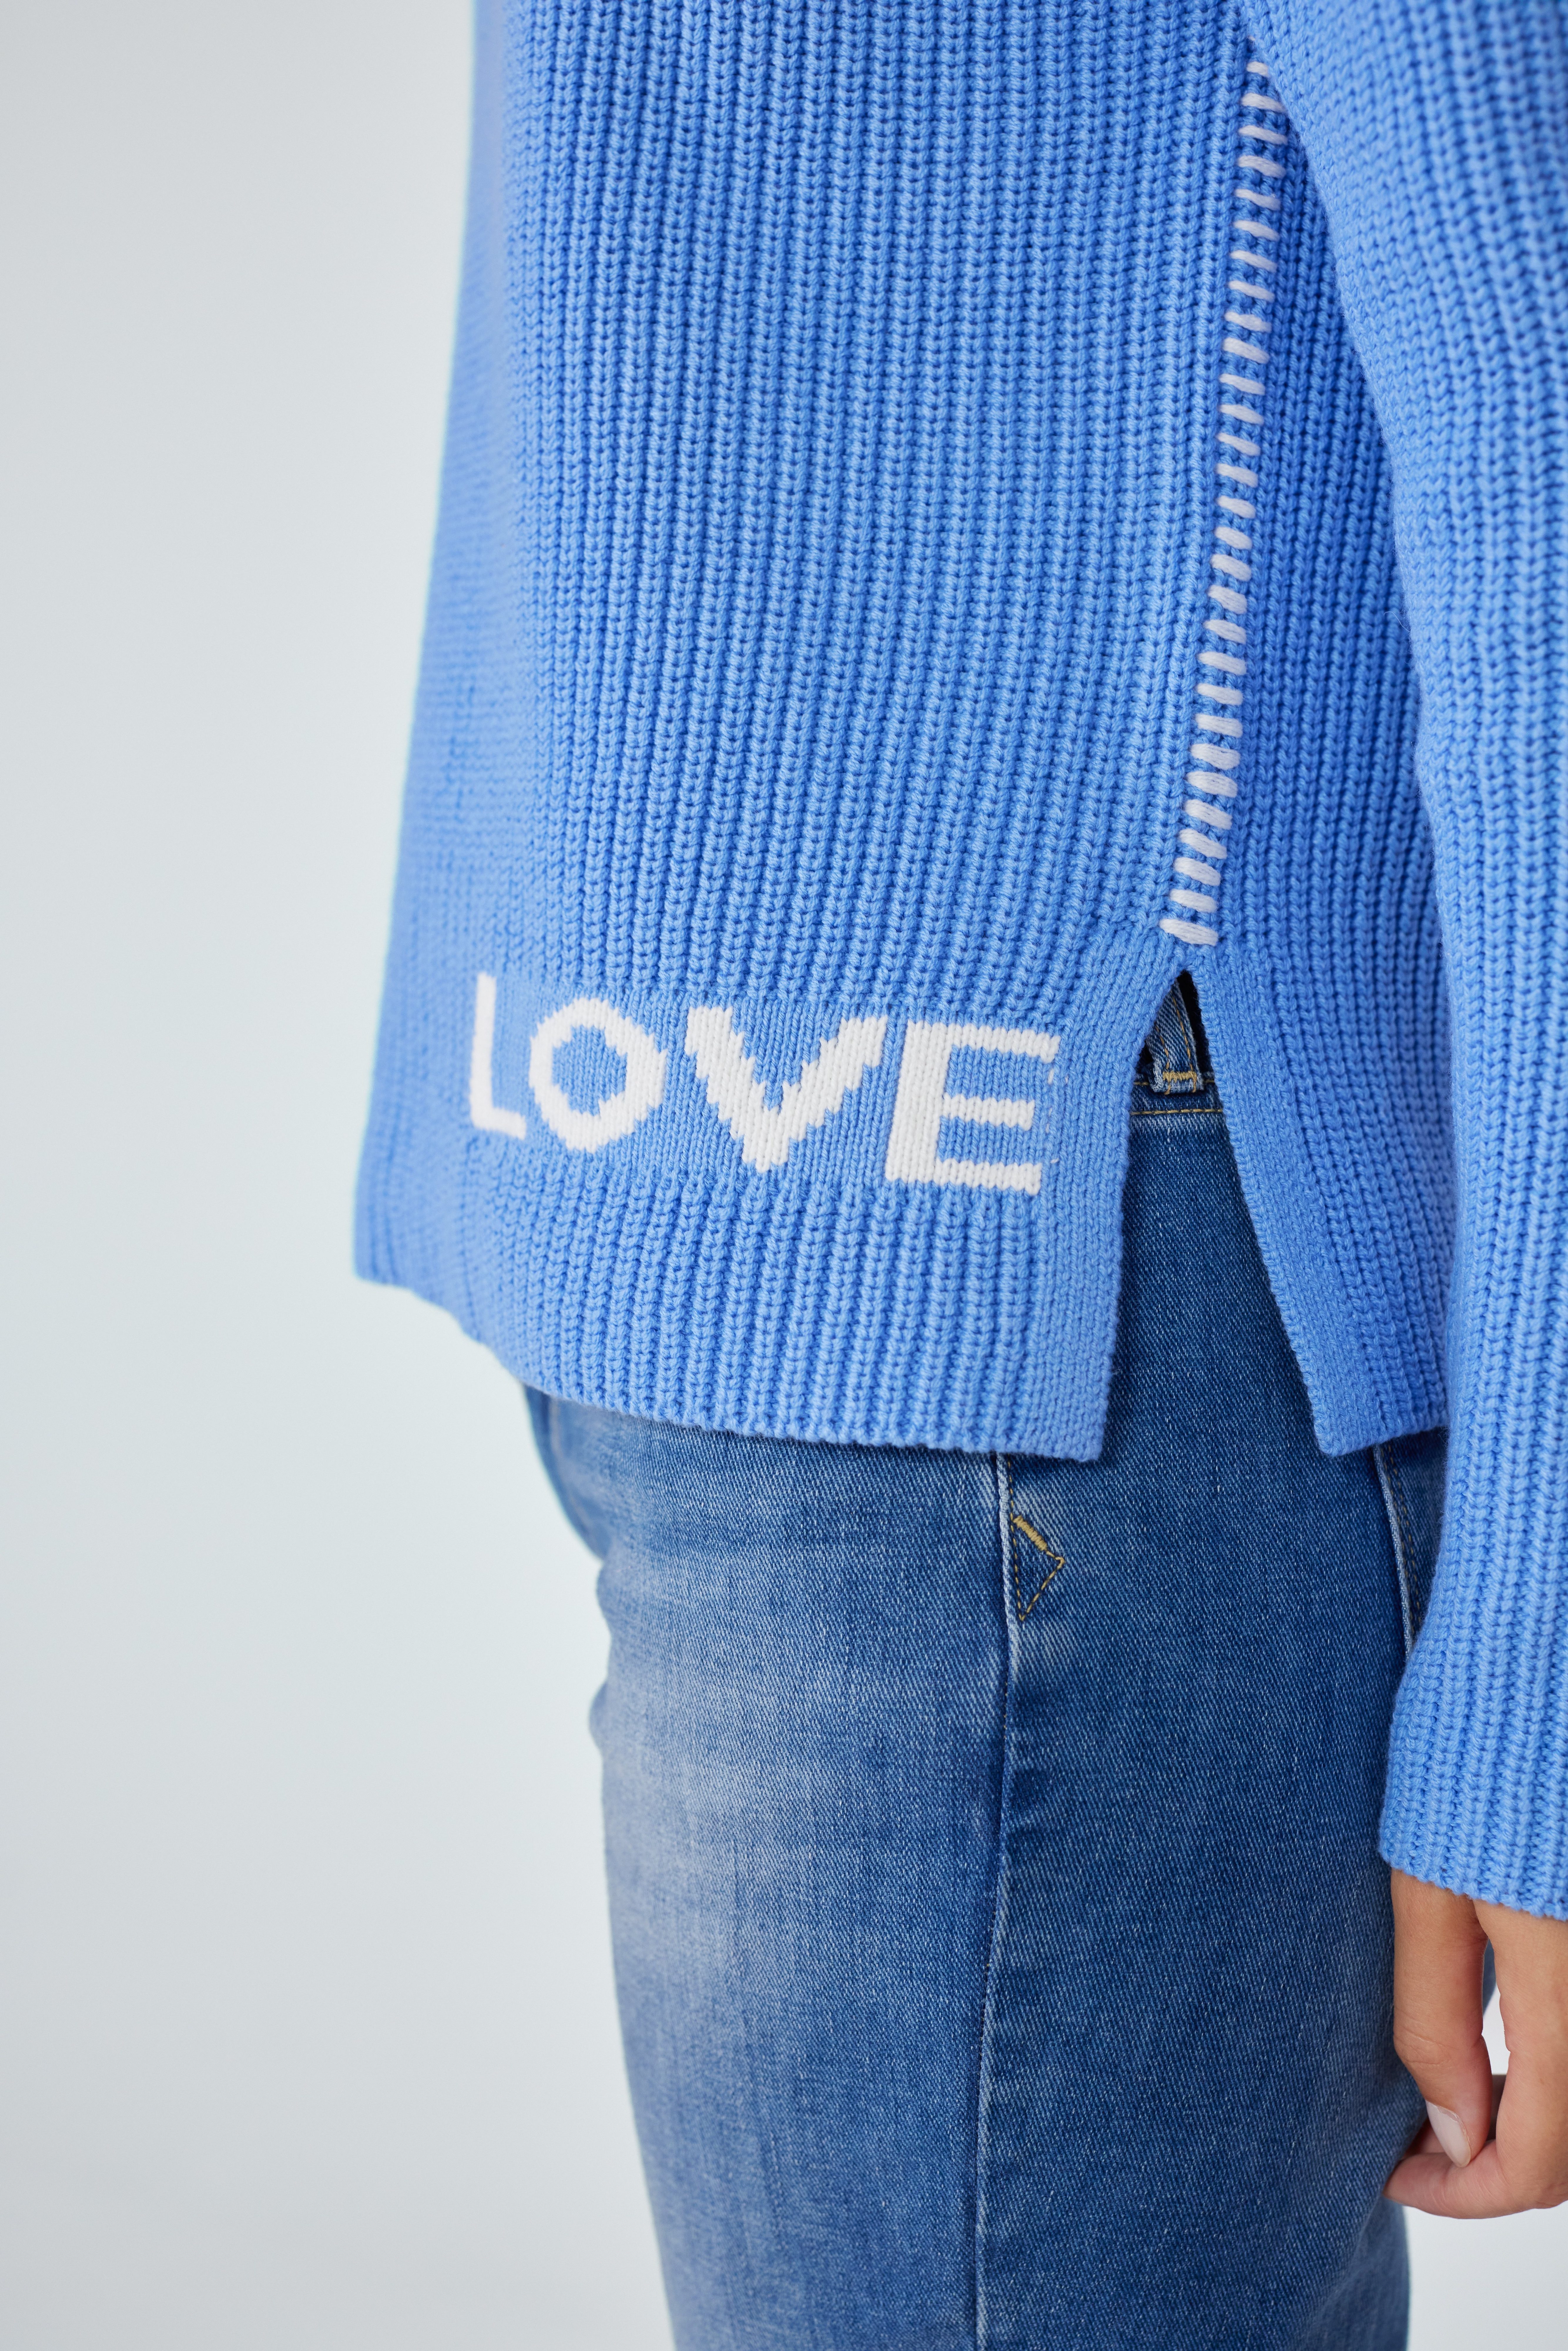 Schriftzug mit Lieblingsstück "LOVE" & Stehkragenpullover BlendaL blue air kontrastafarbenen Nähten